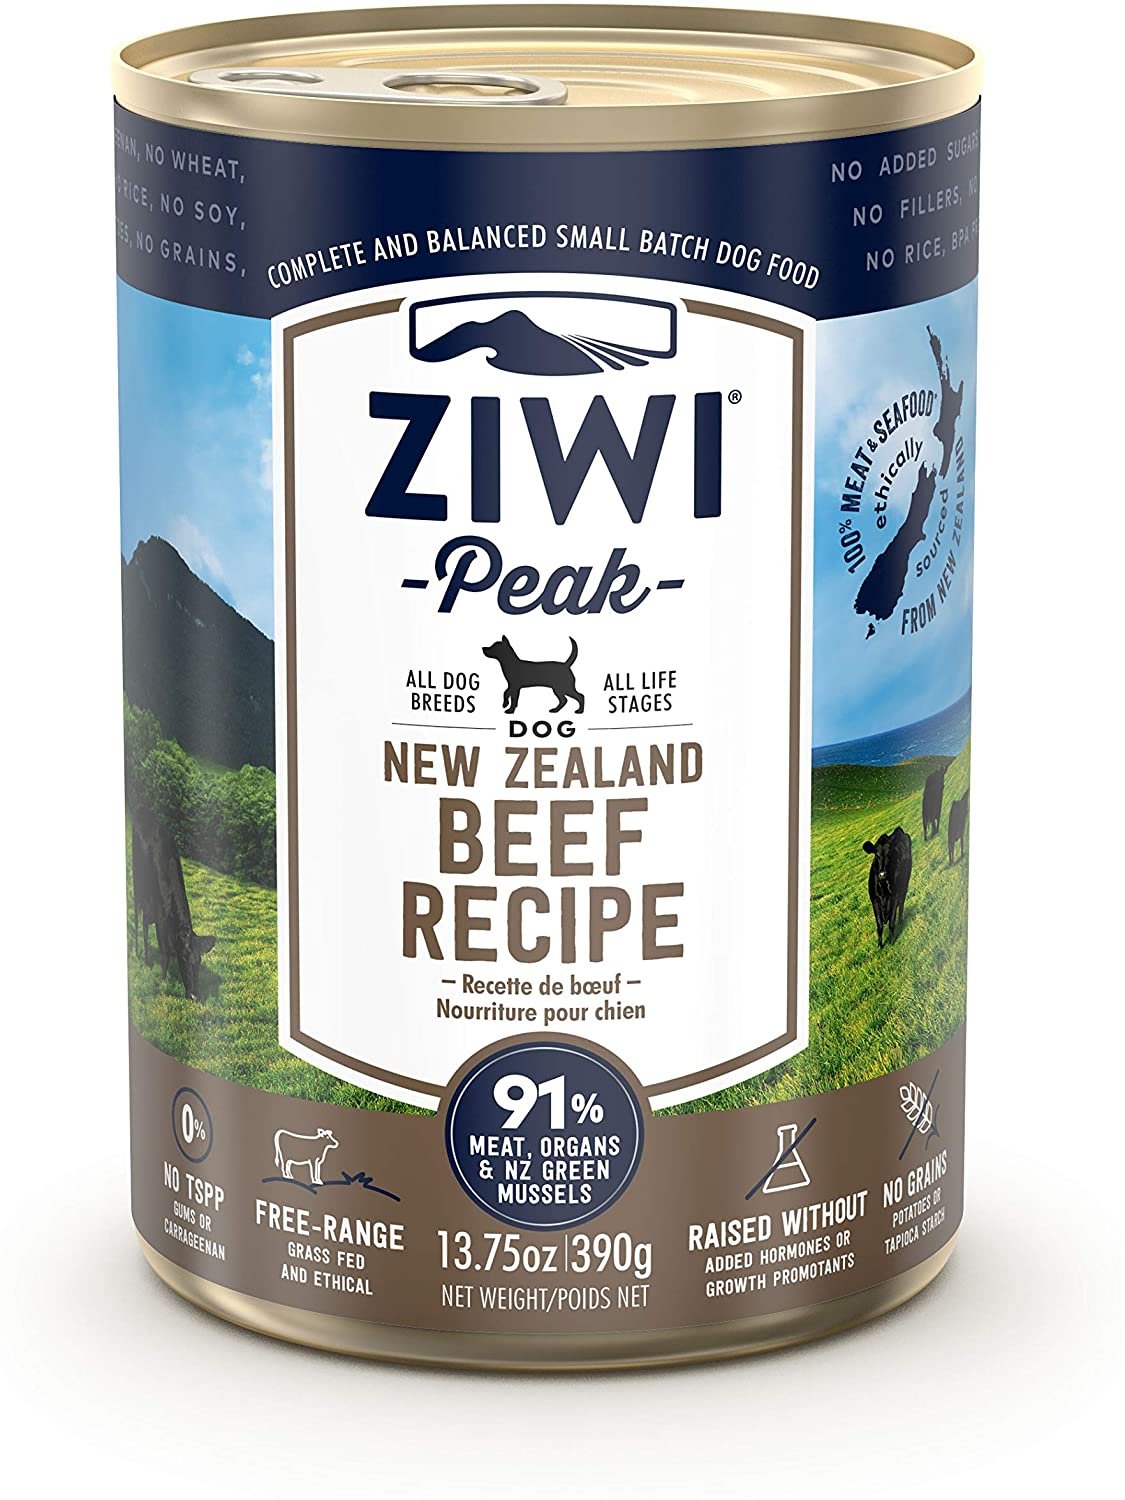 Ziwi Peak New Zealand Beef Recipe Canned food